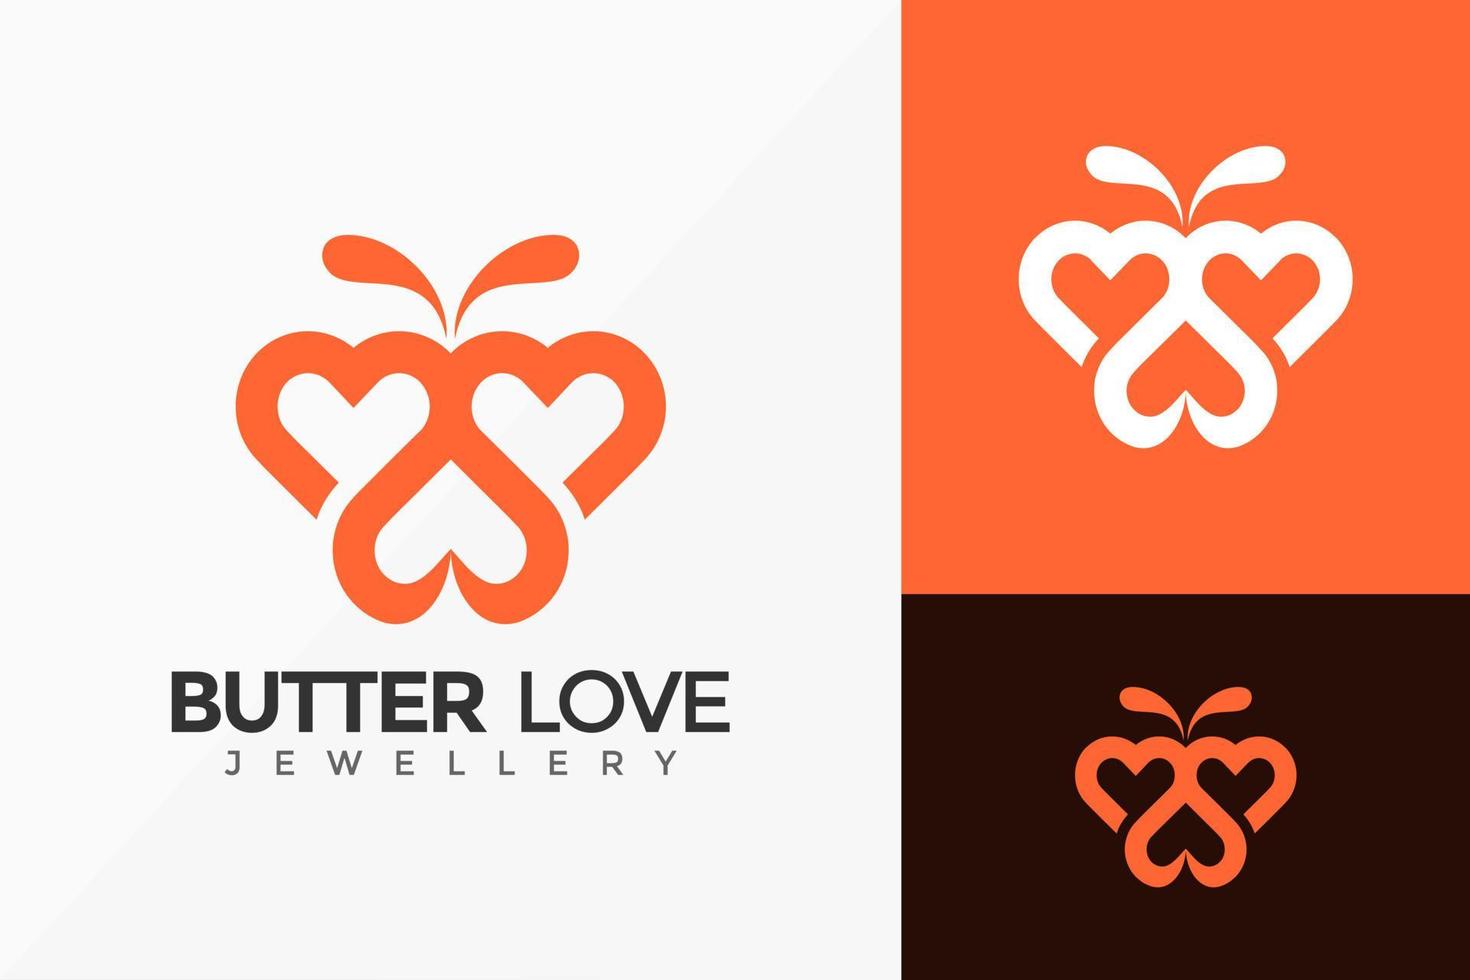 borboleta e amor logotipo design minimalista logotipos modelos de ilustração vetorial vetor